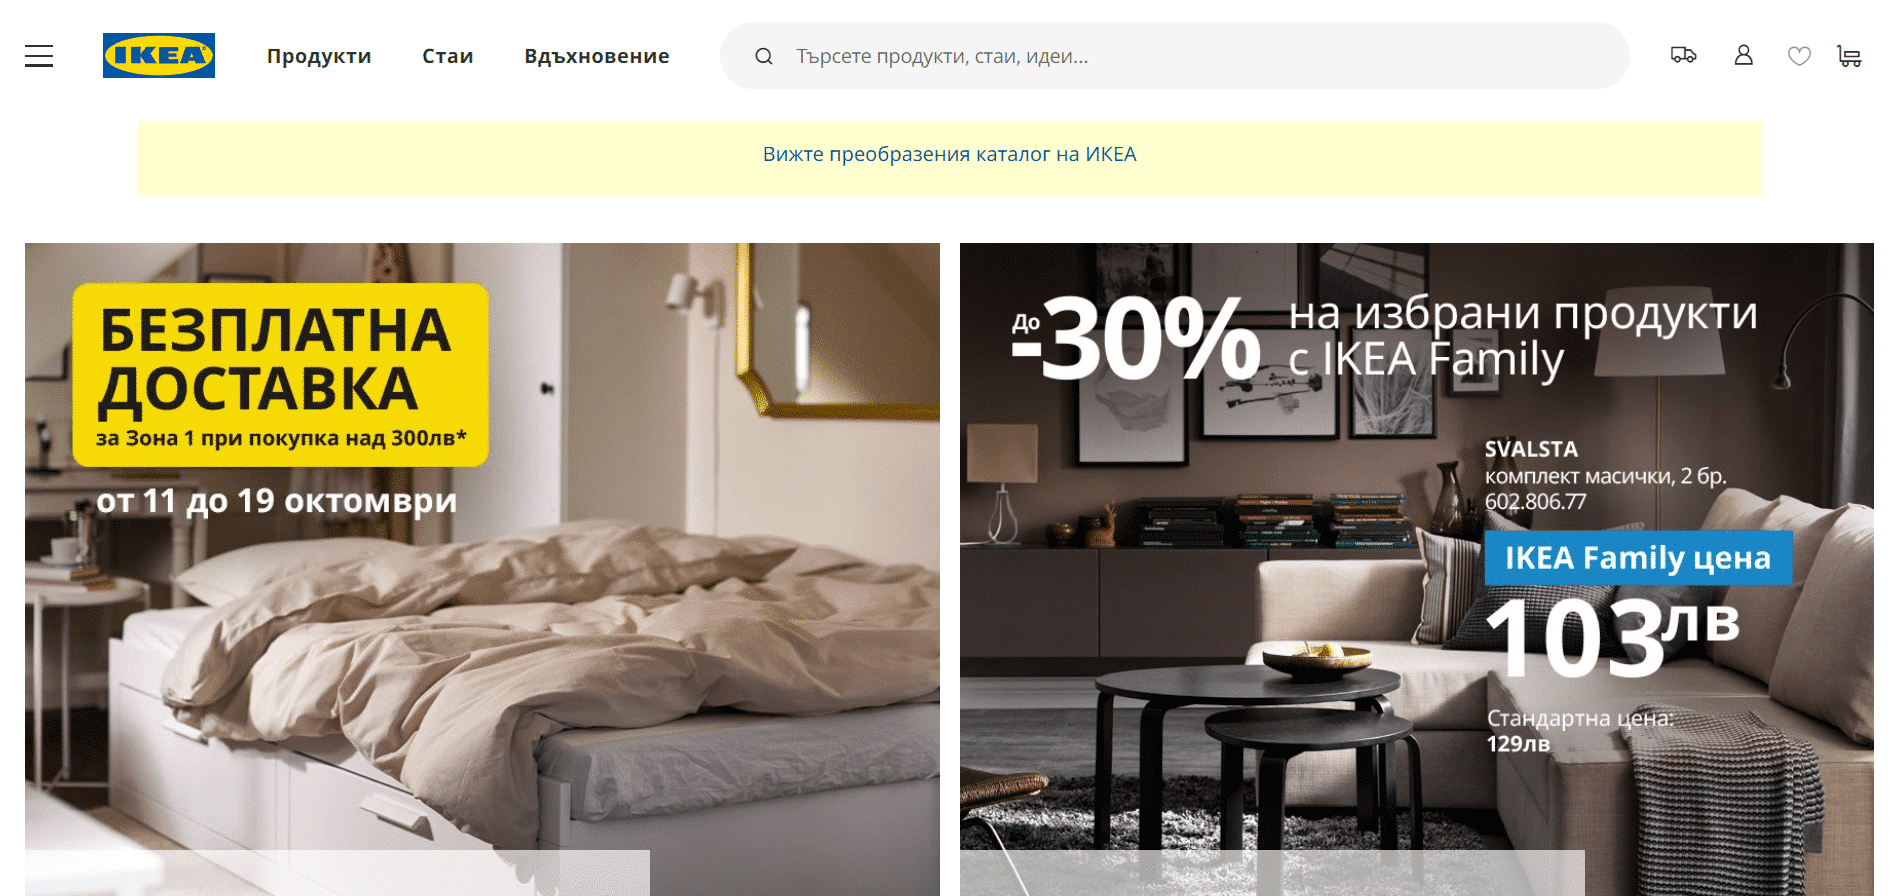 IKEA's website